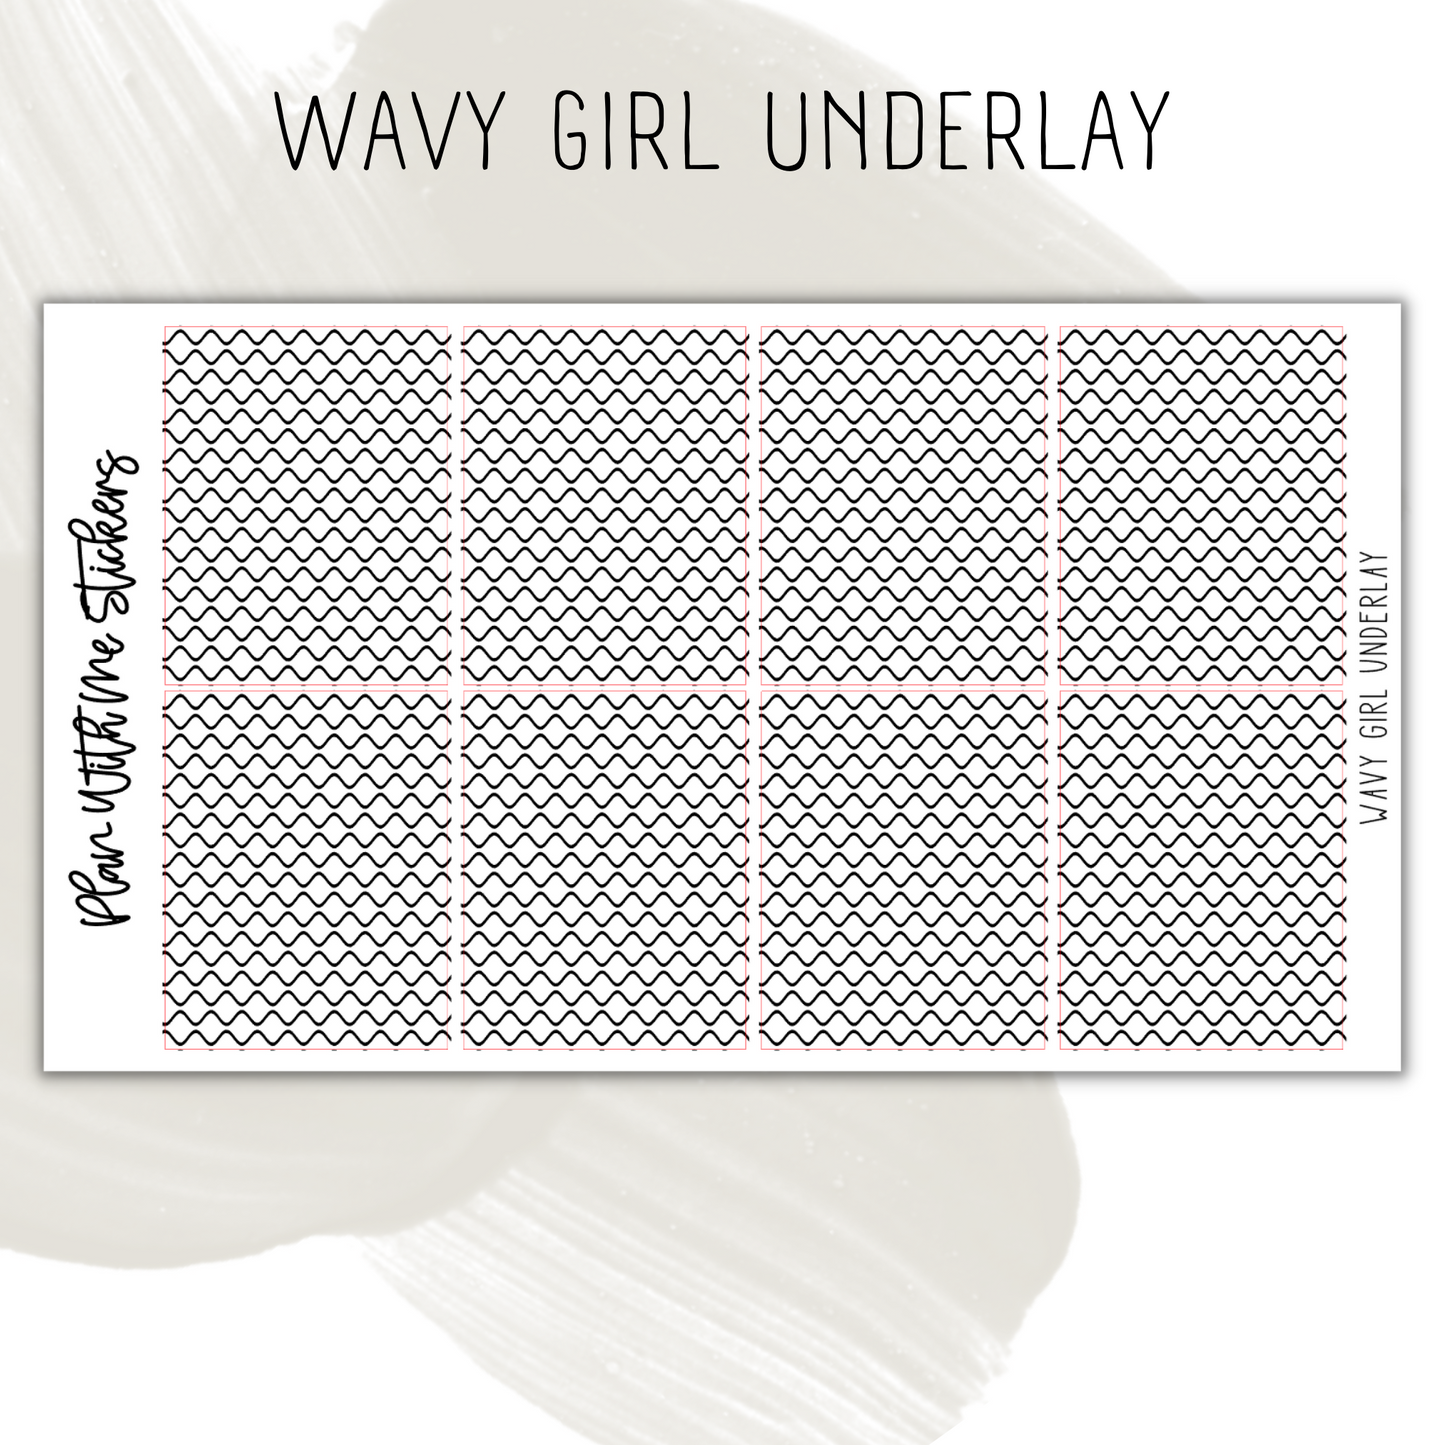 Wavy Girl Underlay